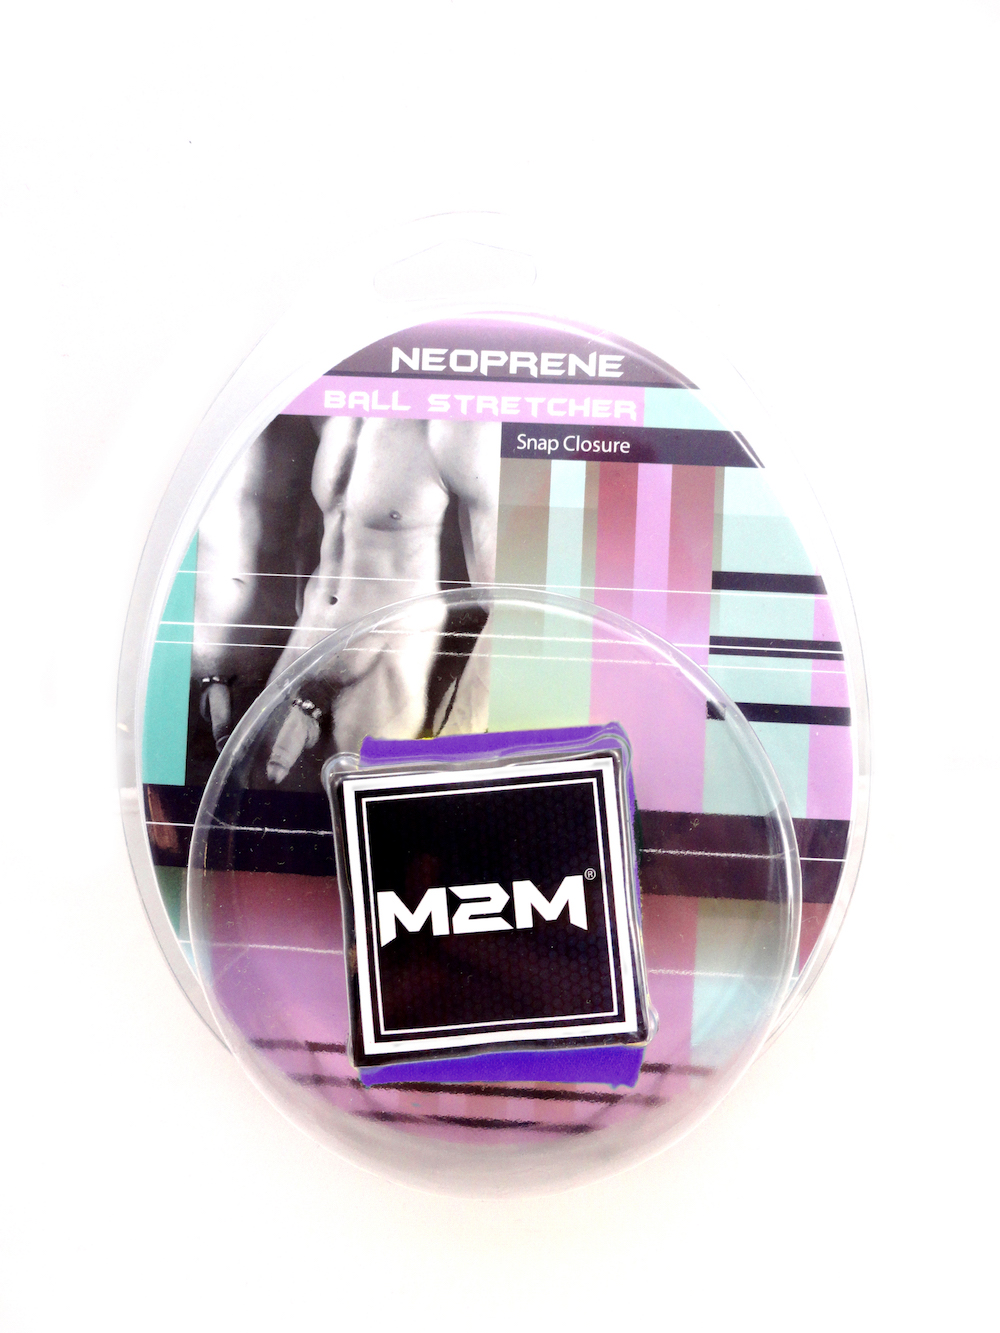 M2M NEOPRENE BALL STRETCHER 1.5 INCH - PURPLE